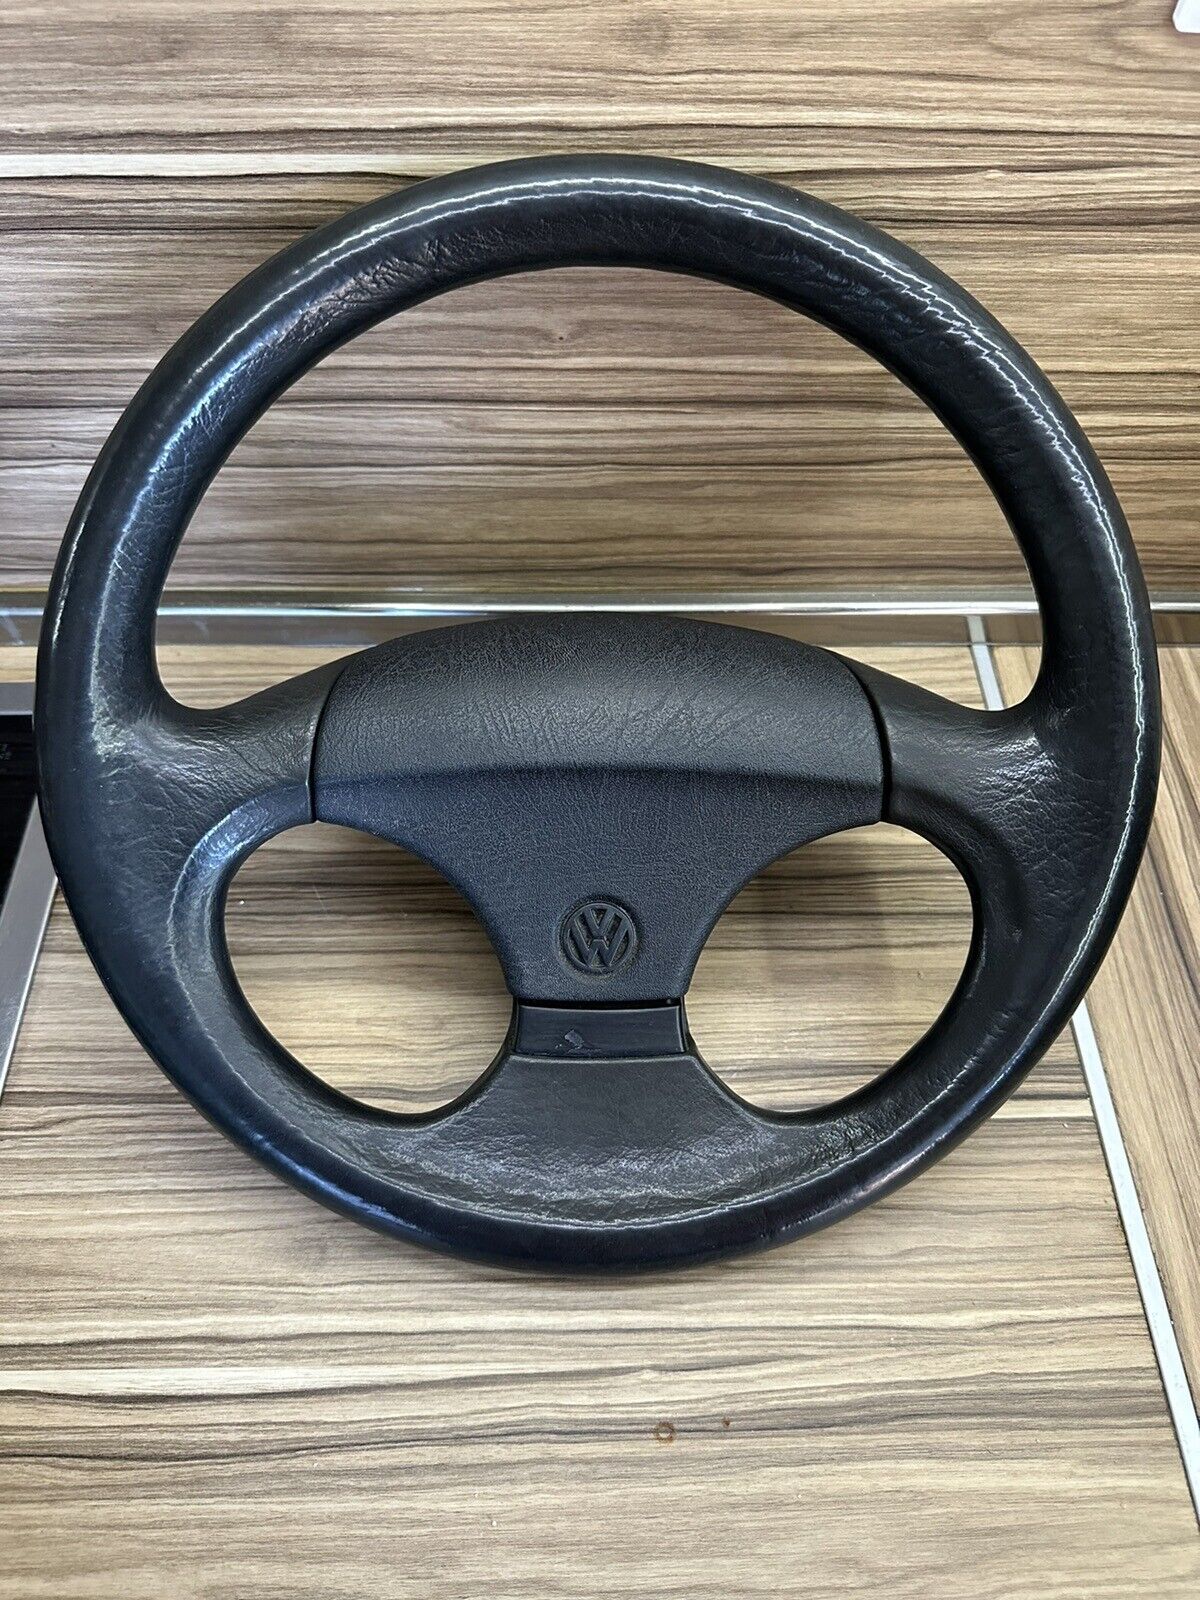 ⭐ Steering Wheel VW Polo G40, GT, Golf MK3, Vento GTI 16V, Corrado, Passat G60